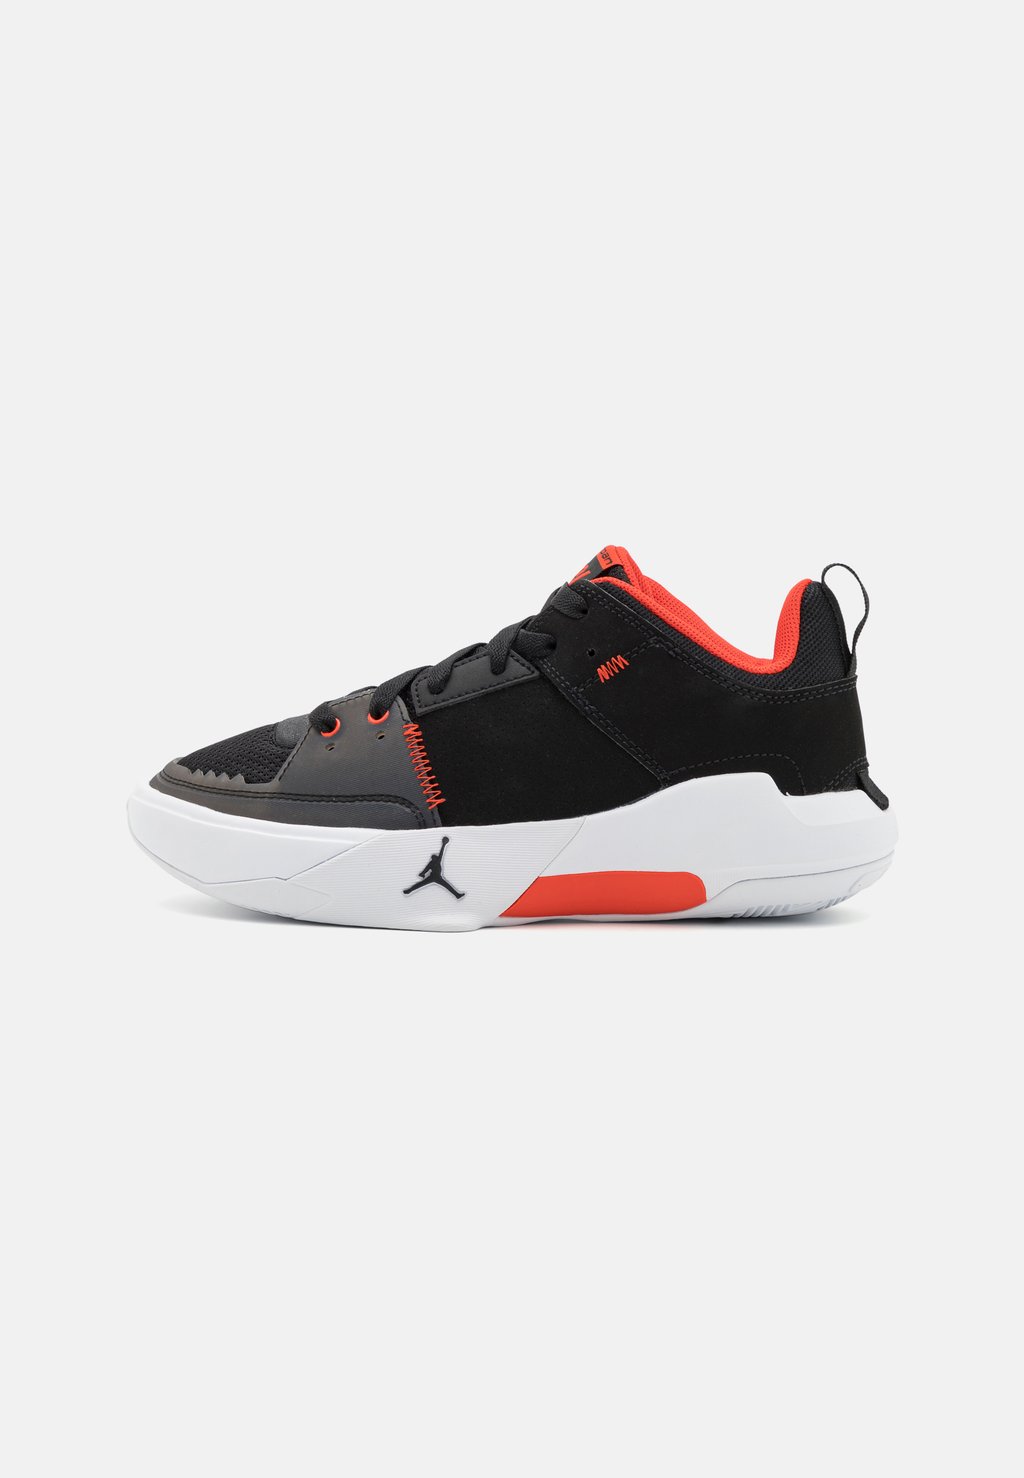 Баскетбольные кроссовки Jordan One Take 5 Unisex Jordan, цвет black/habanero red/white/anthracite